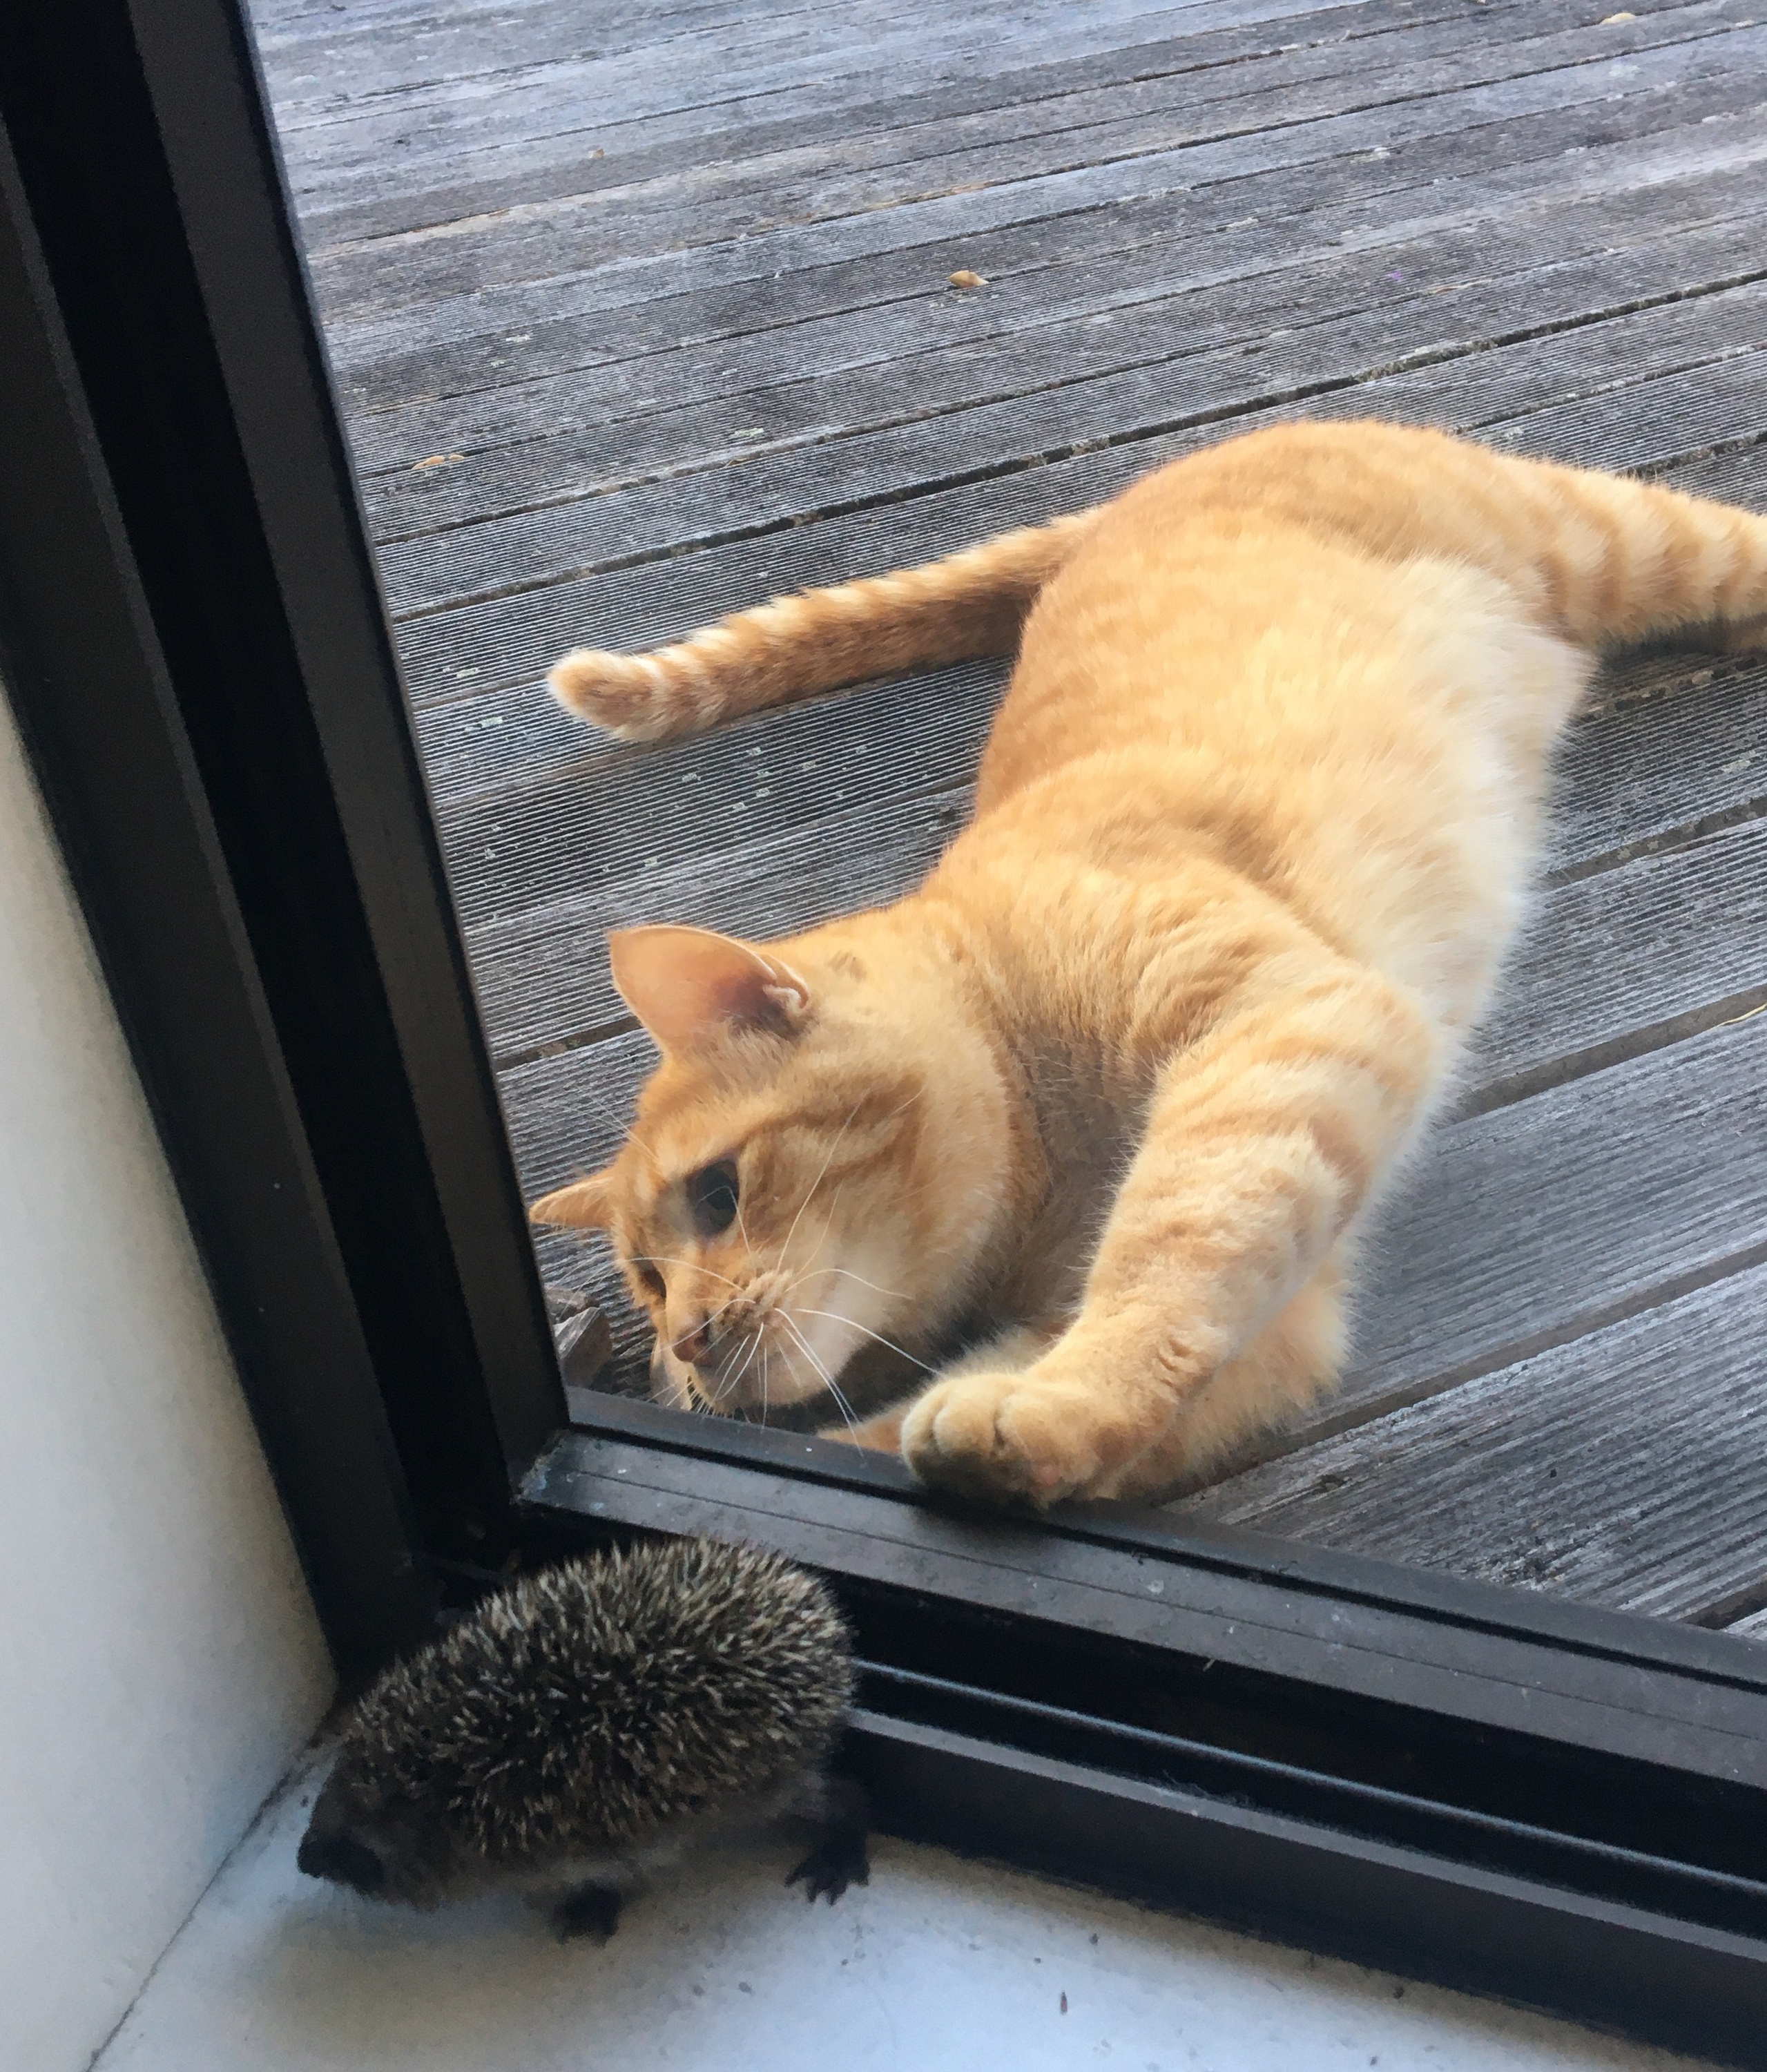 An orange cat on a patio